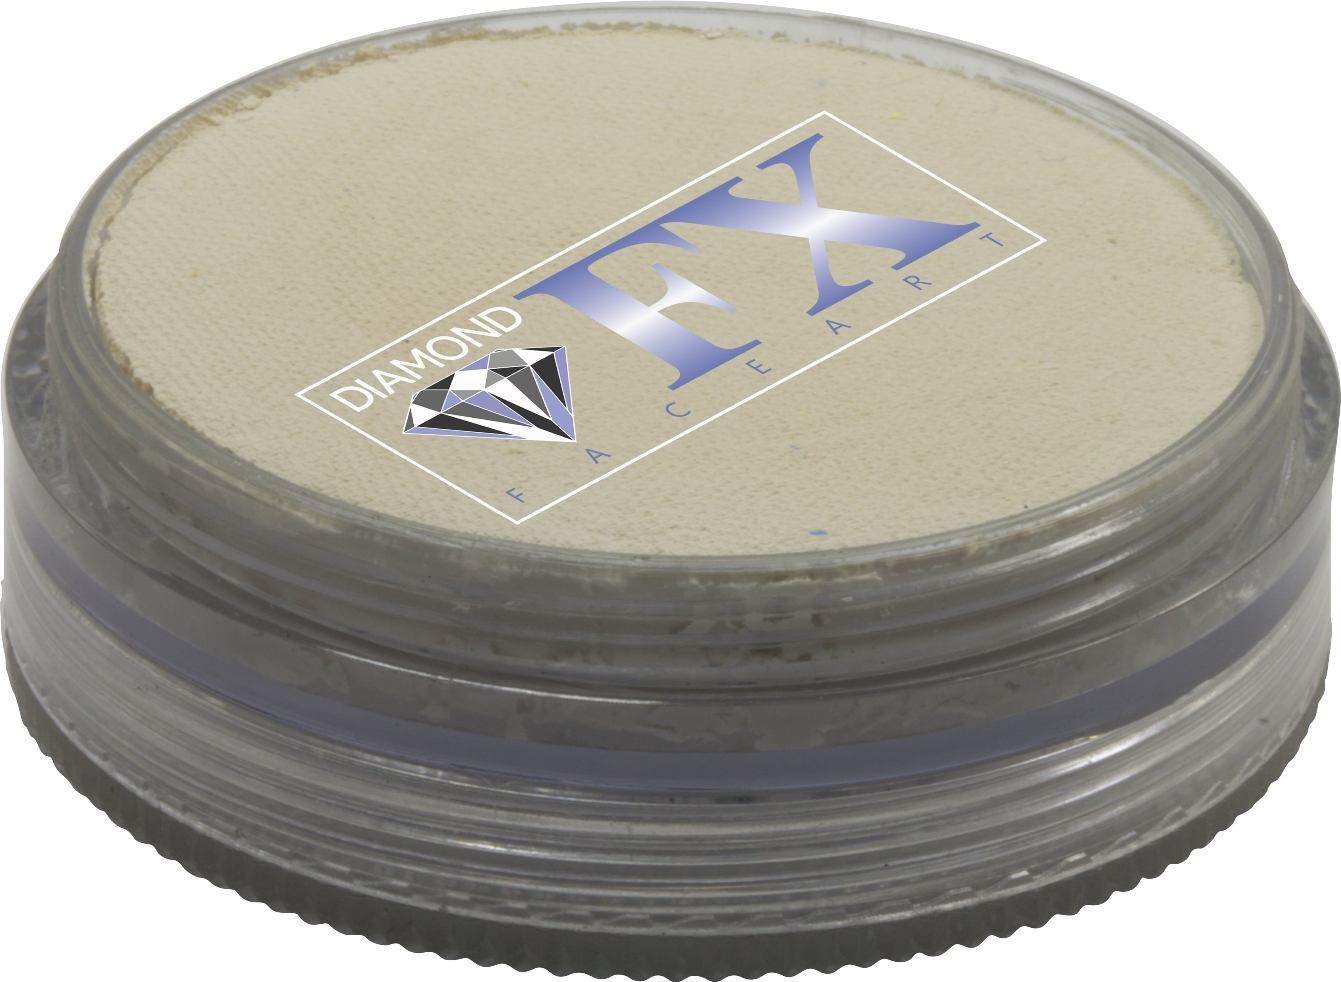 Diamond FX White Neon 45g (Cosmetic) - Small Image